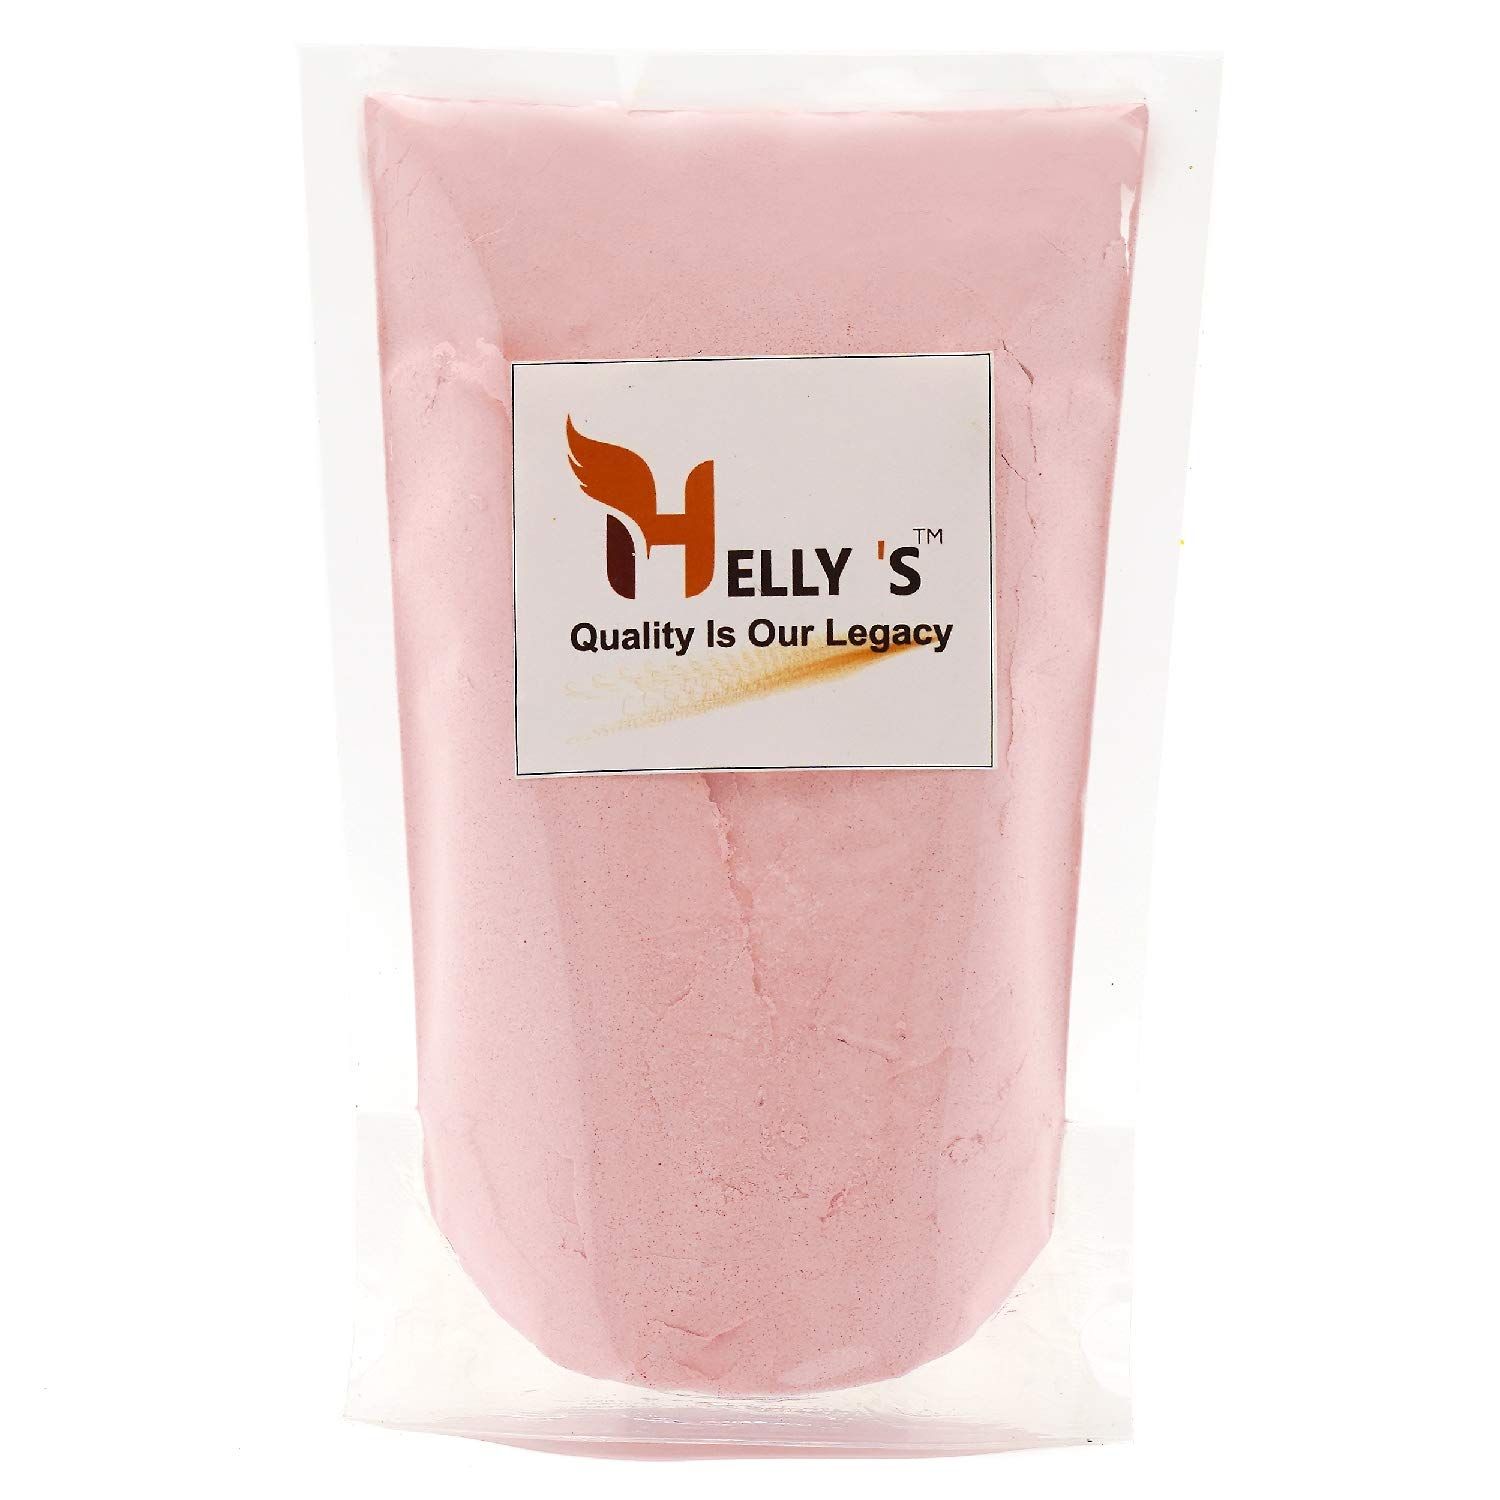 Helly's Eggless Custard Powder Raspberry Flavour Image